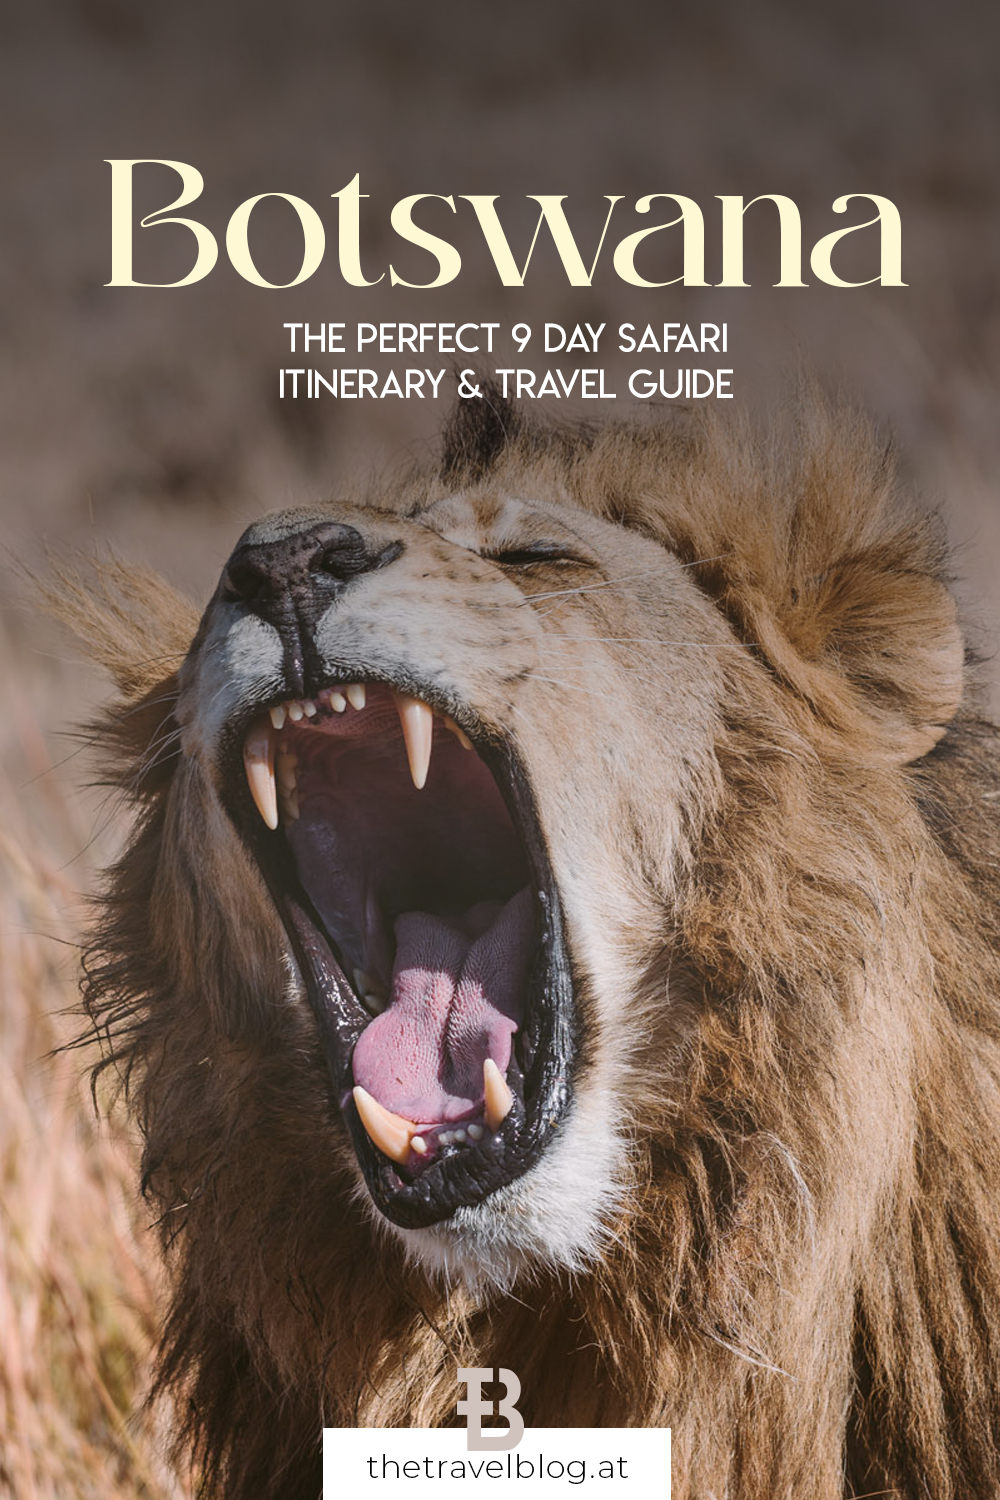 Botswana travel guide: An expert guide for a 9 day safari in Botswana